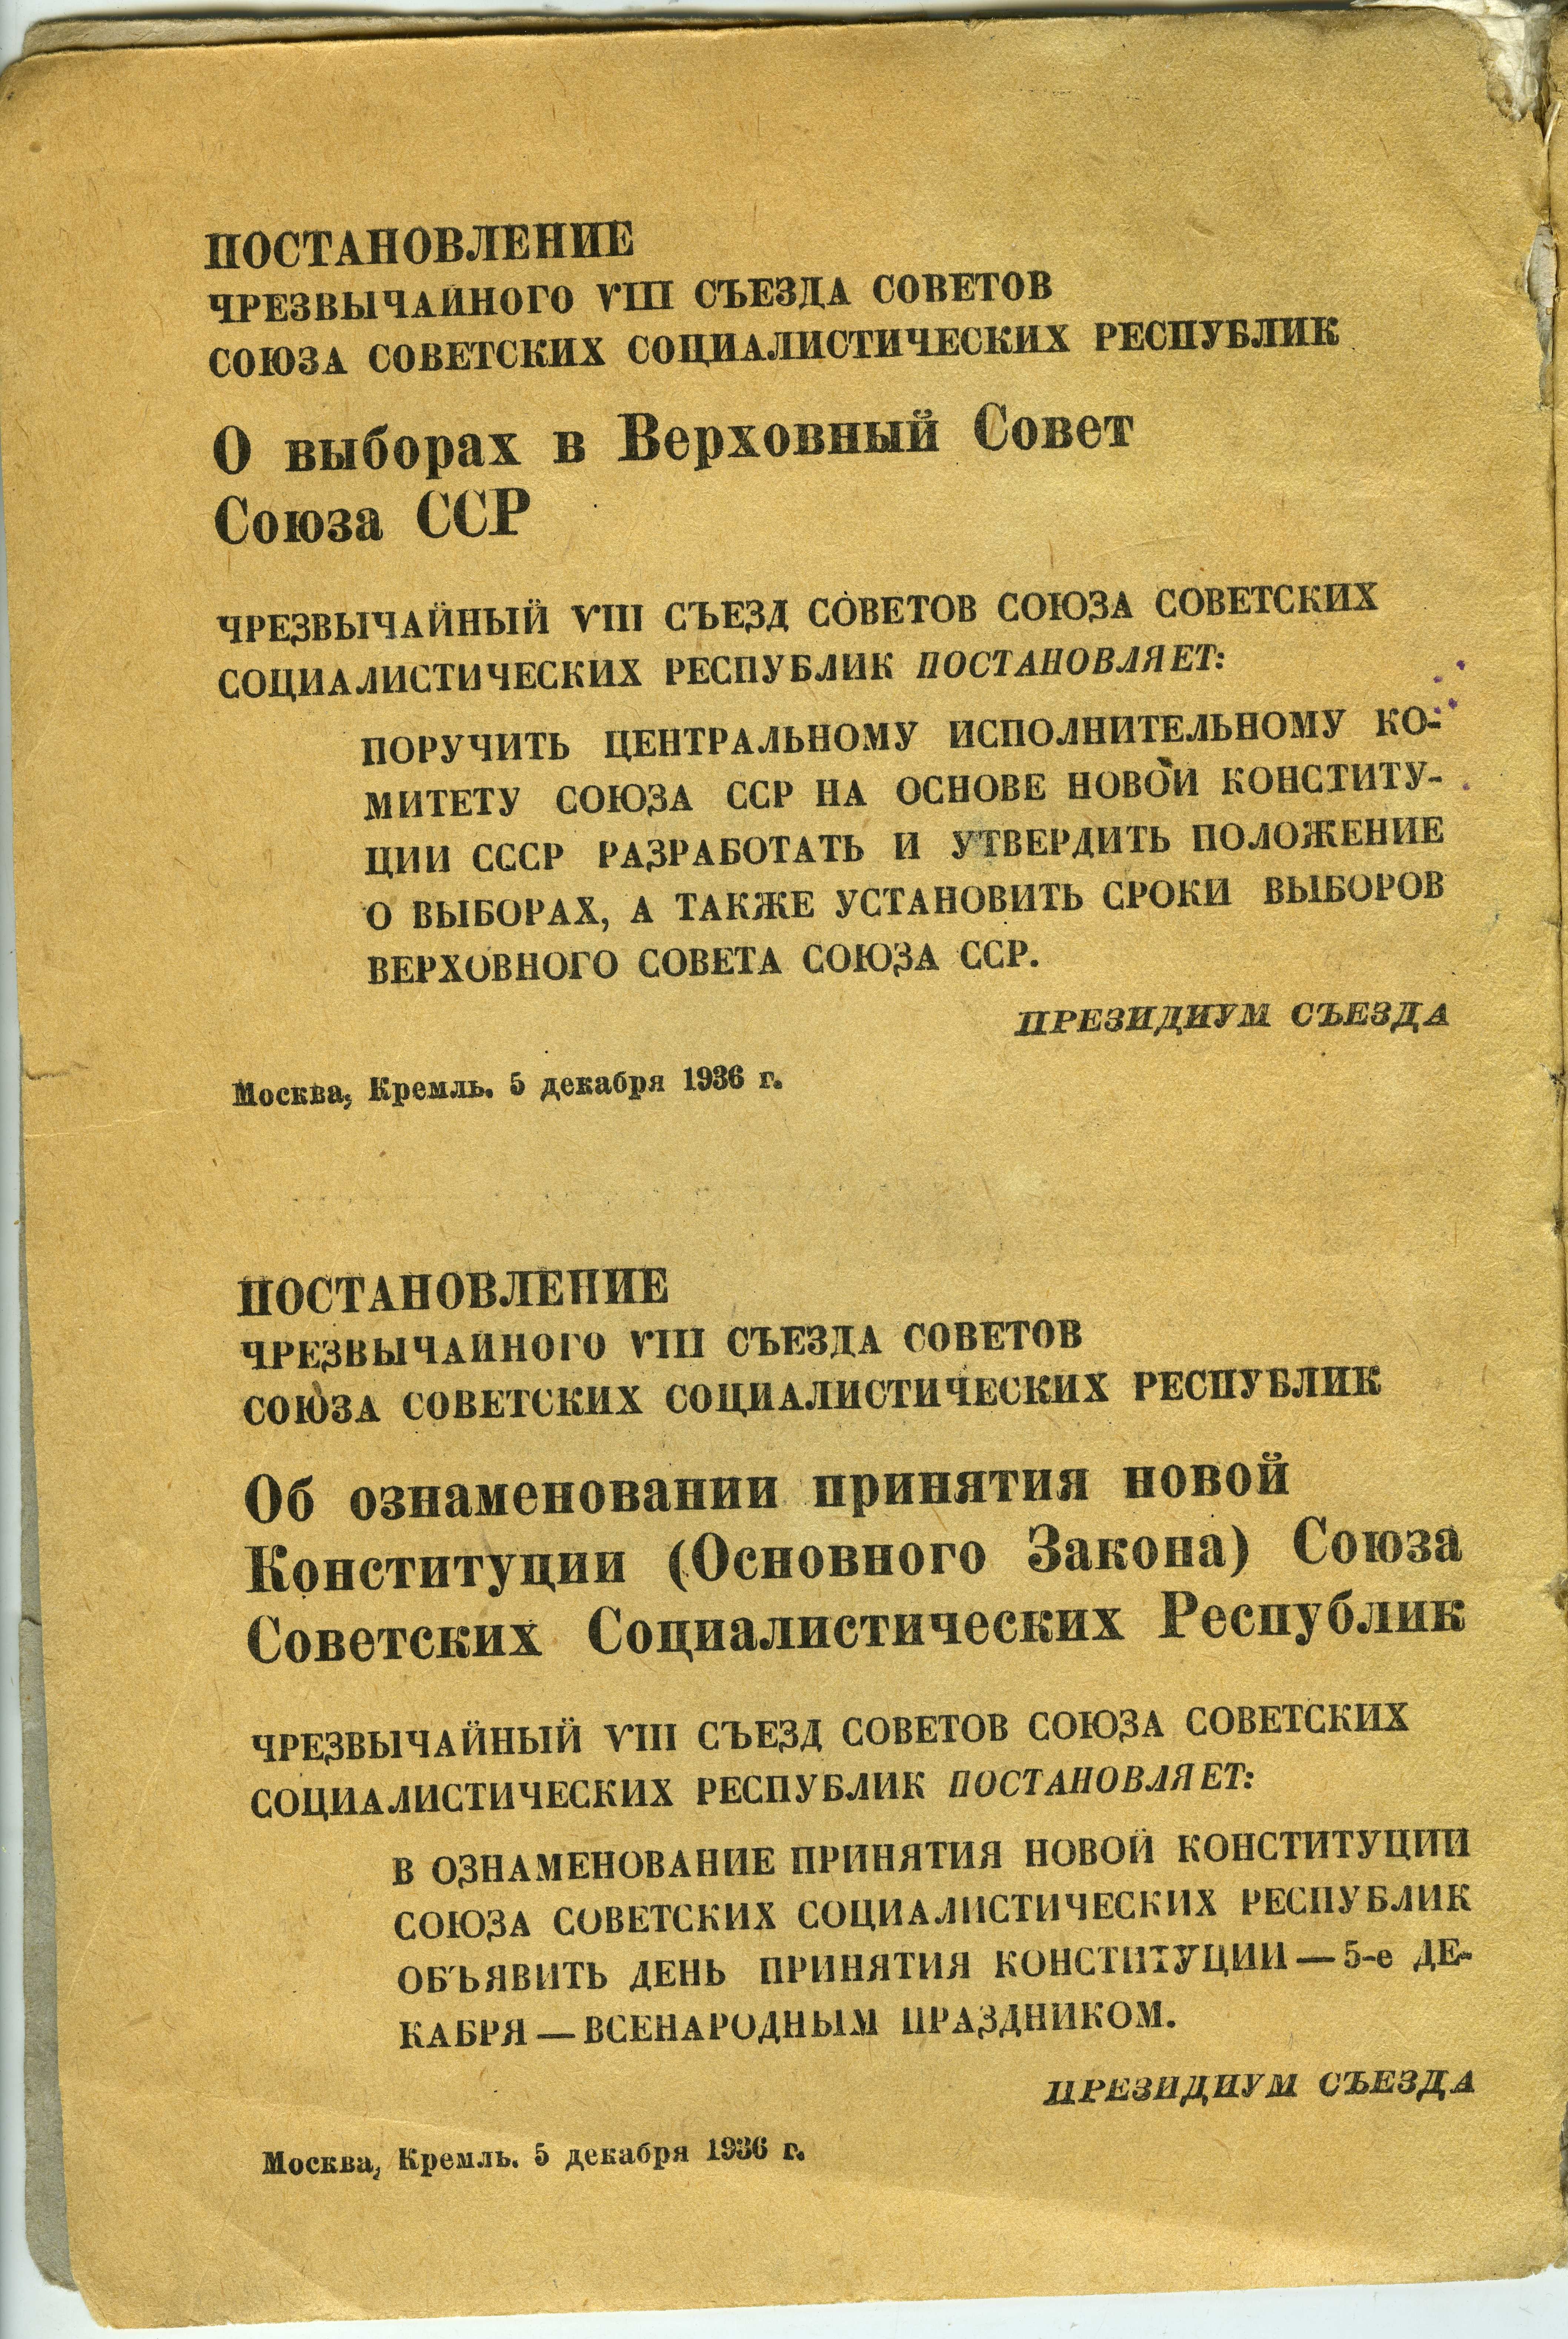 НСБ ГАТО. Конституция СССР. М.: ПАРТИЗДАТ, 1936. С. 2